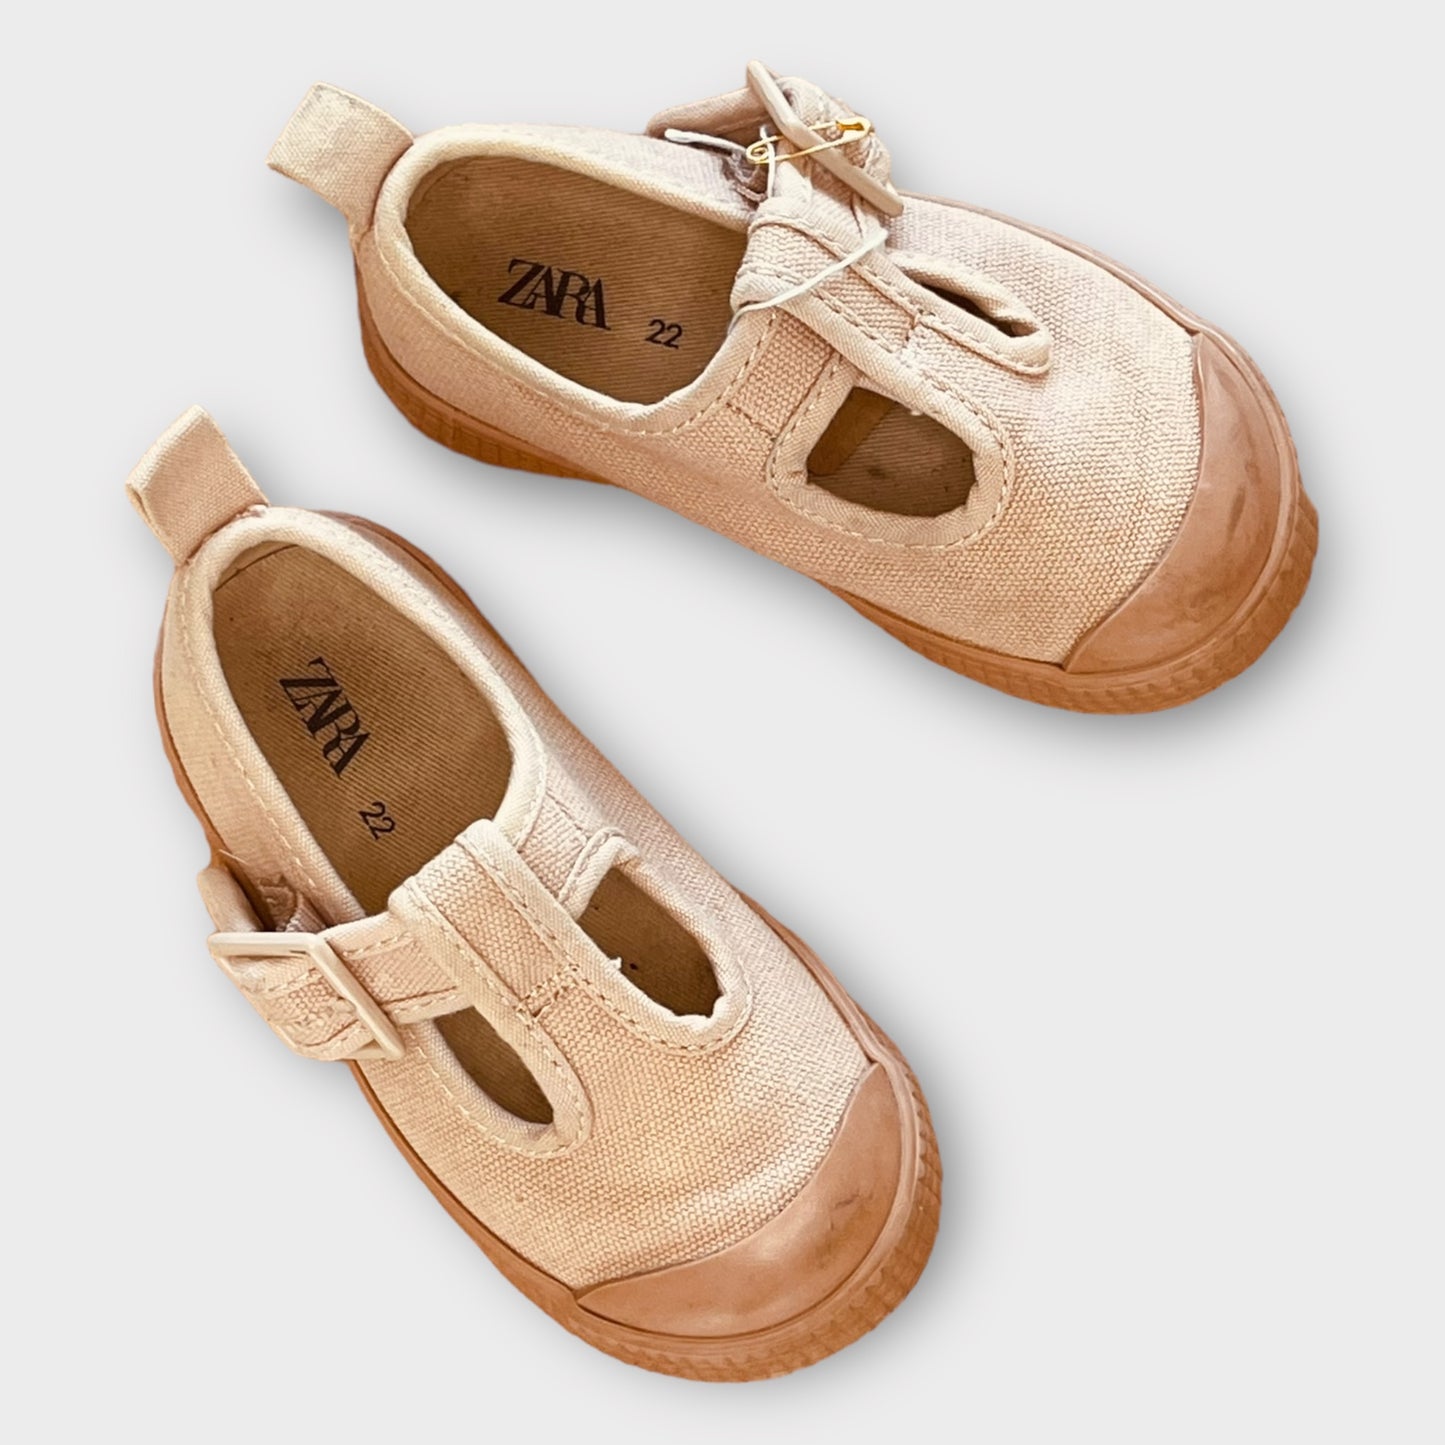 H&amp;M - shoes - 12 months, 18 months, 24 months